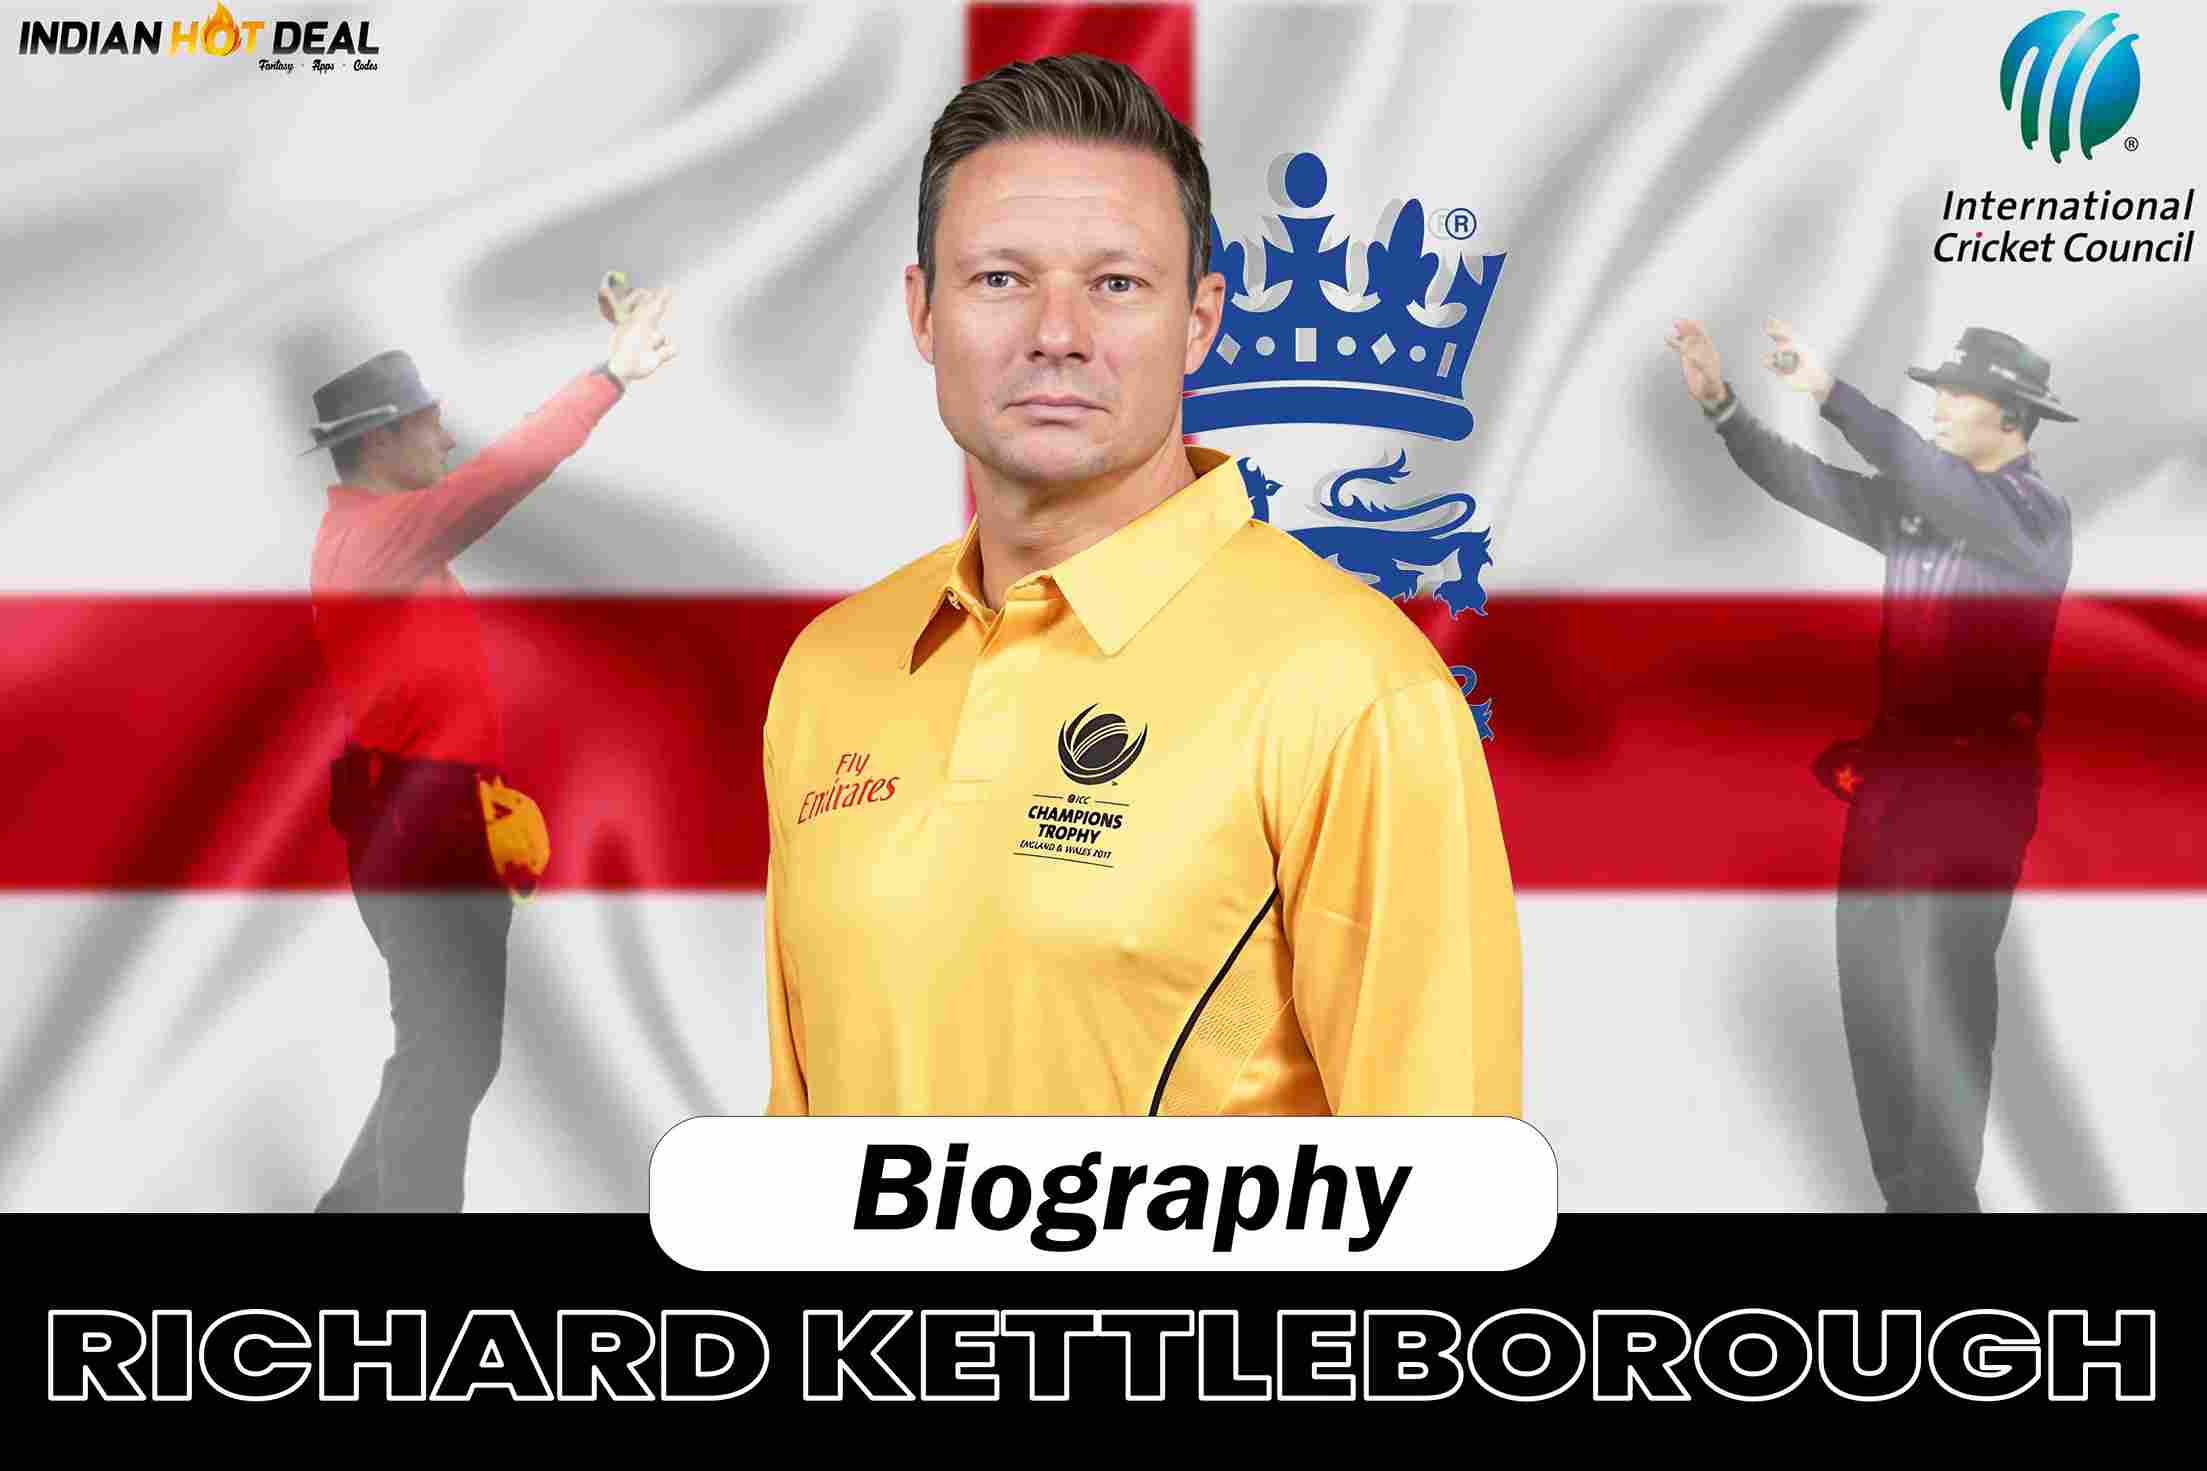 Richard Kettleborough Biography